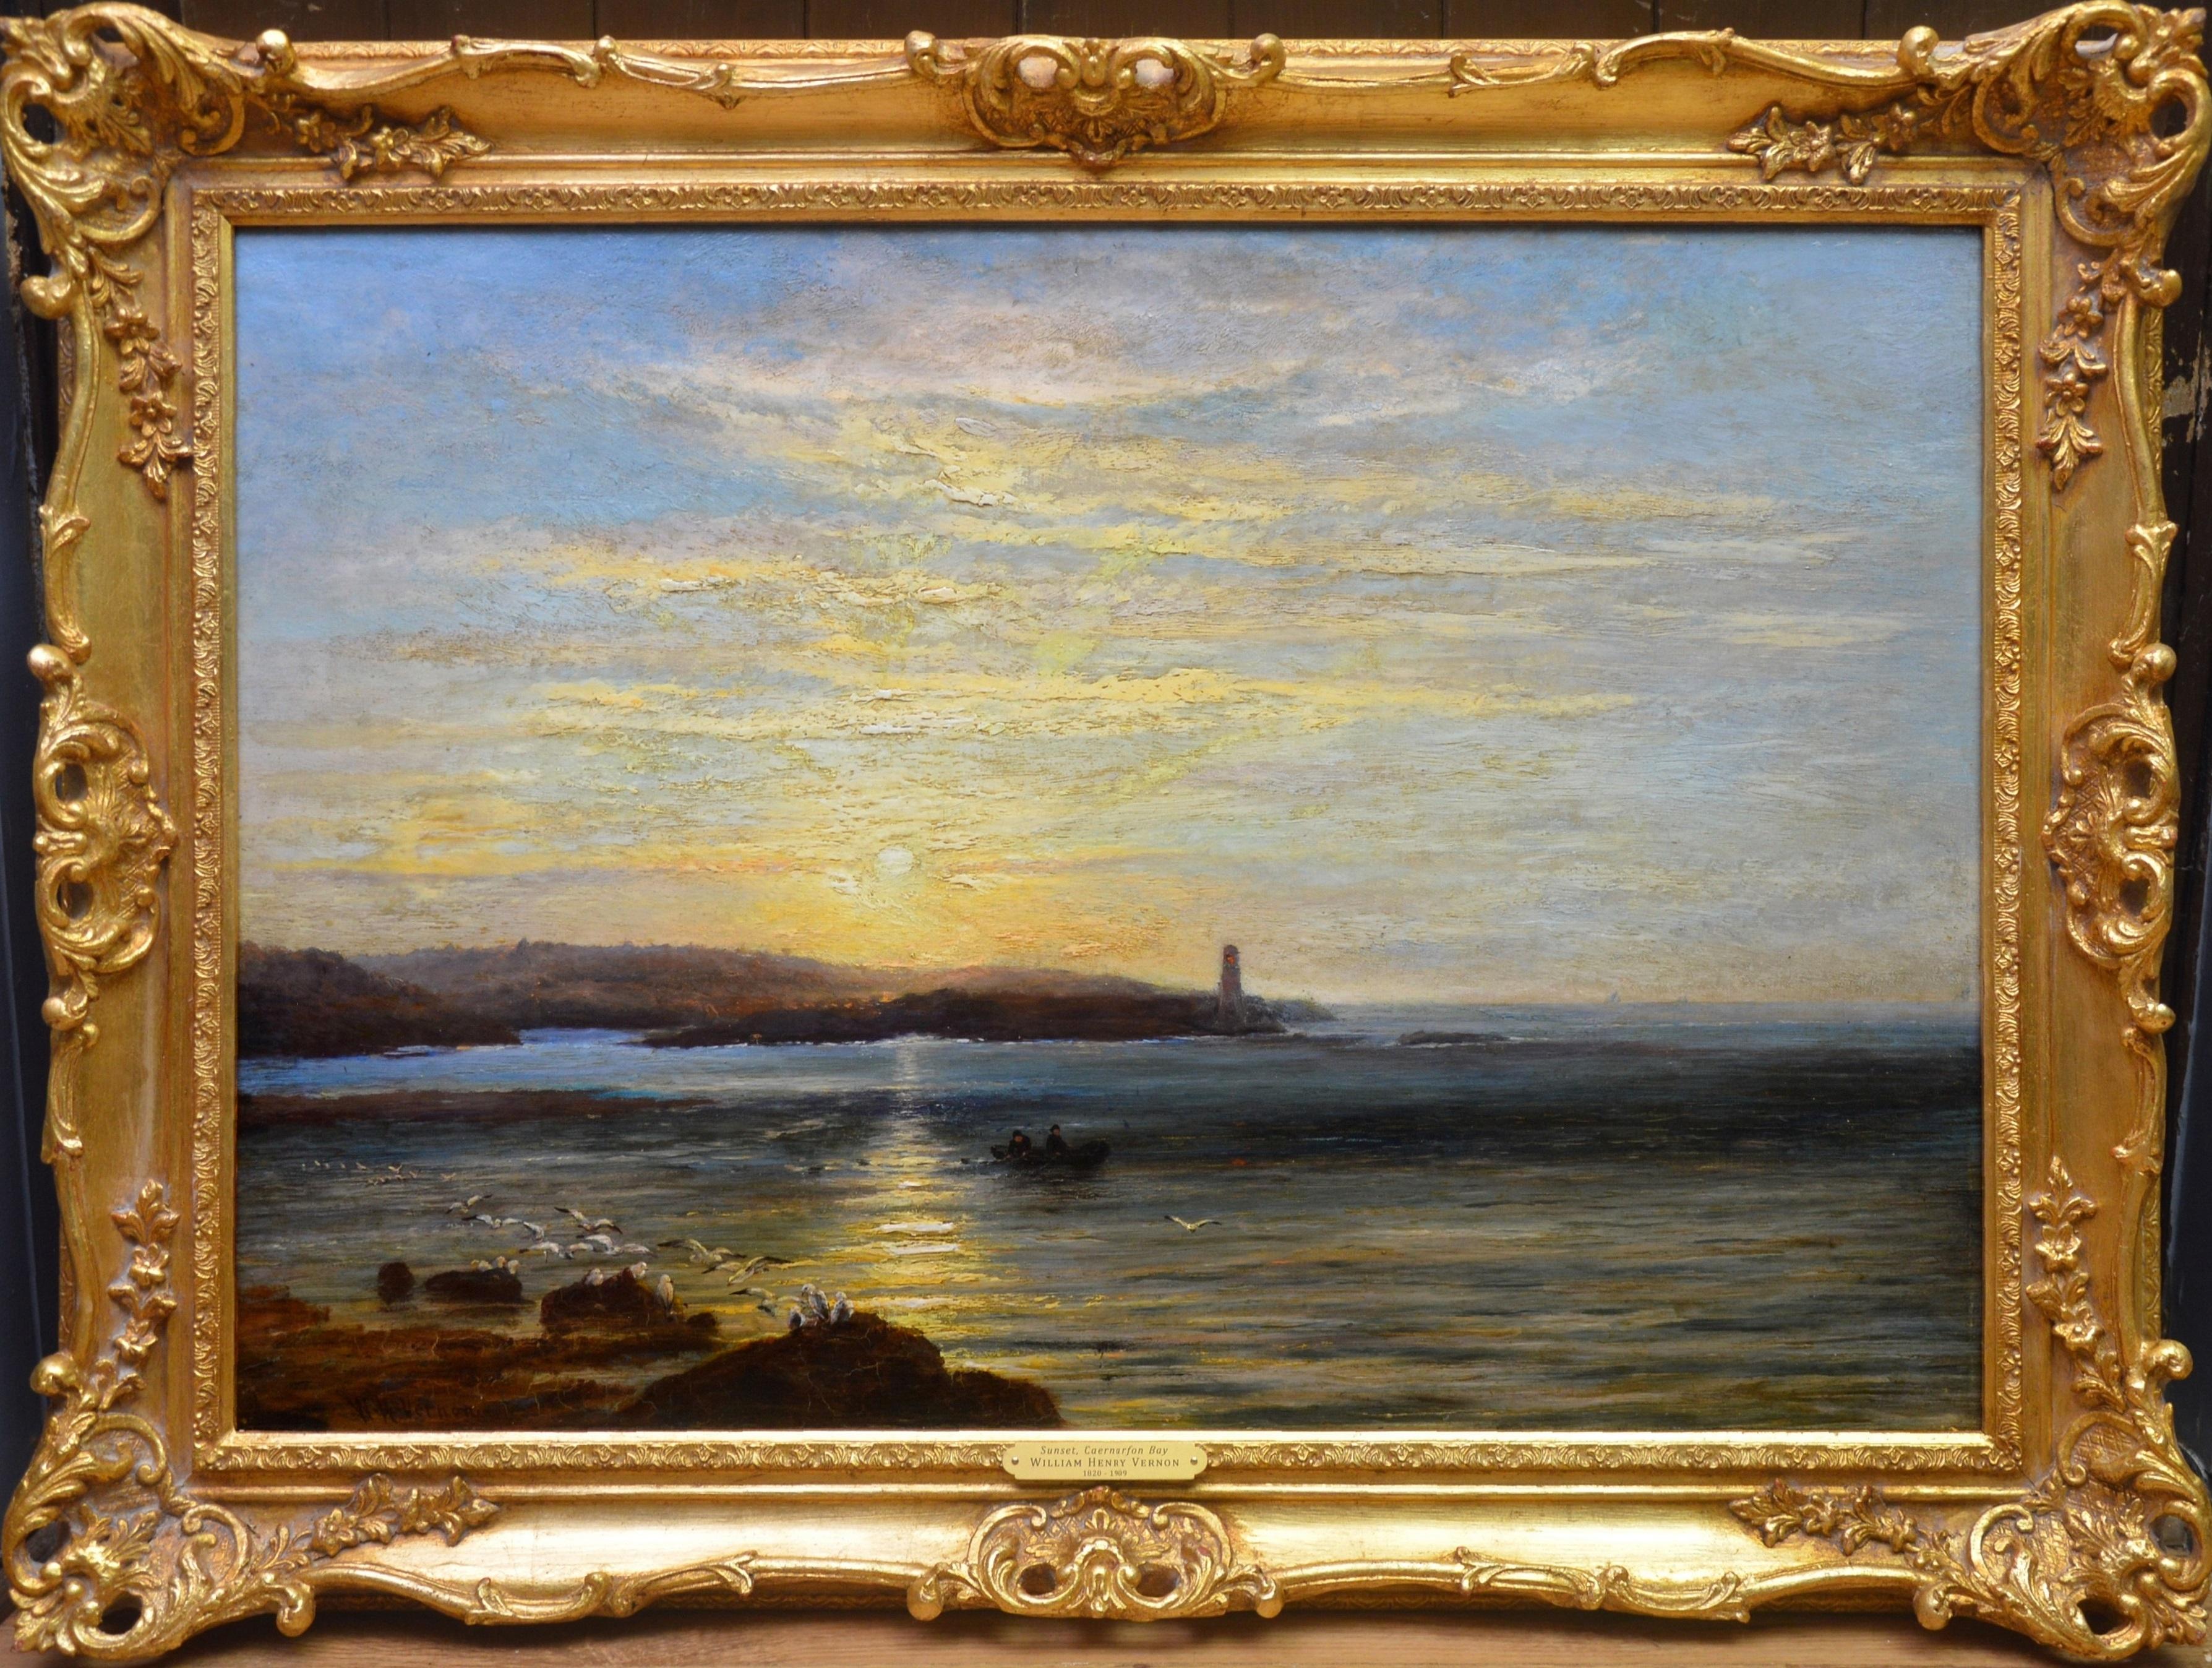 Unknown Landscape Painting - Sunset, Caernarfon Bay - 19th Century Oil Painting North Wales Coastal Landscape